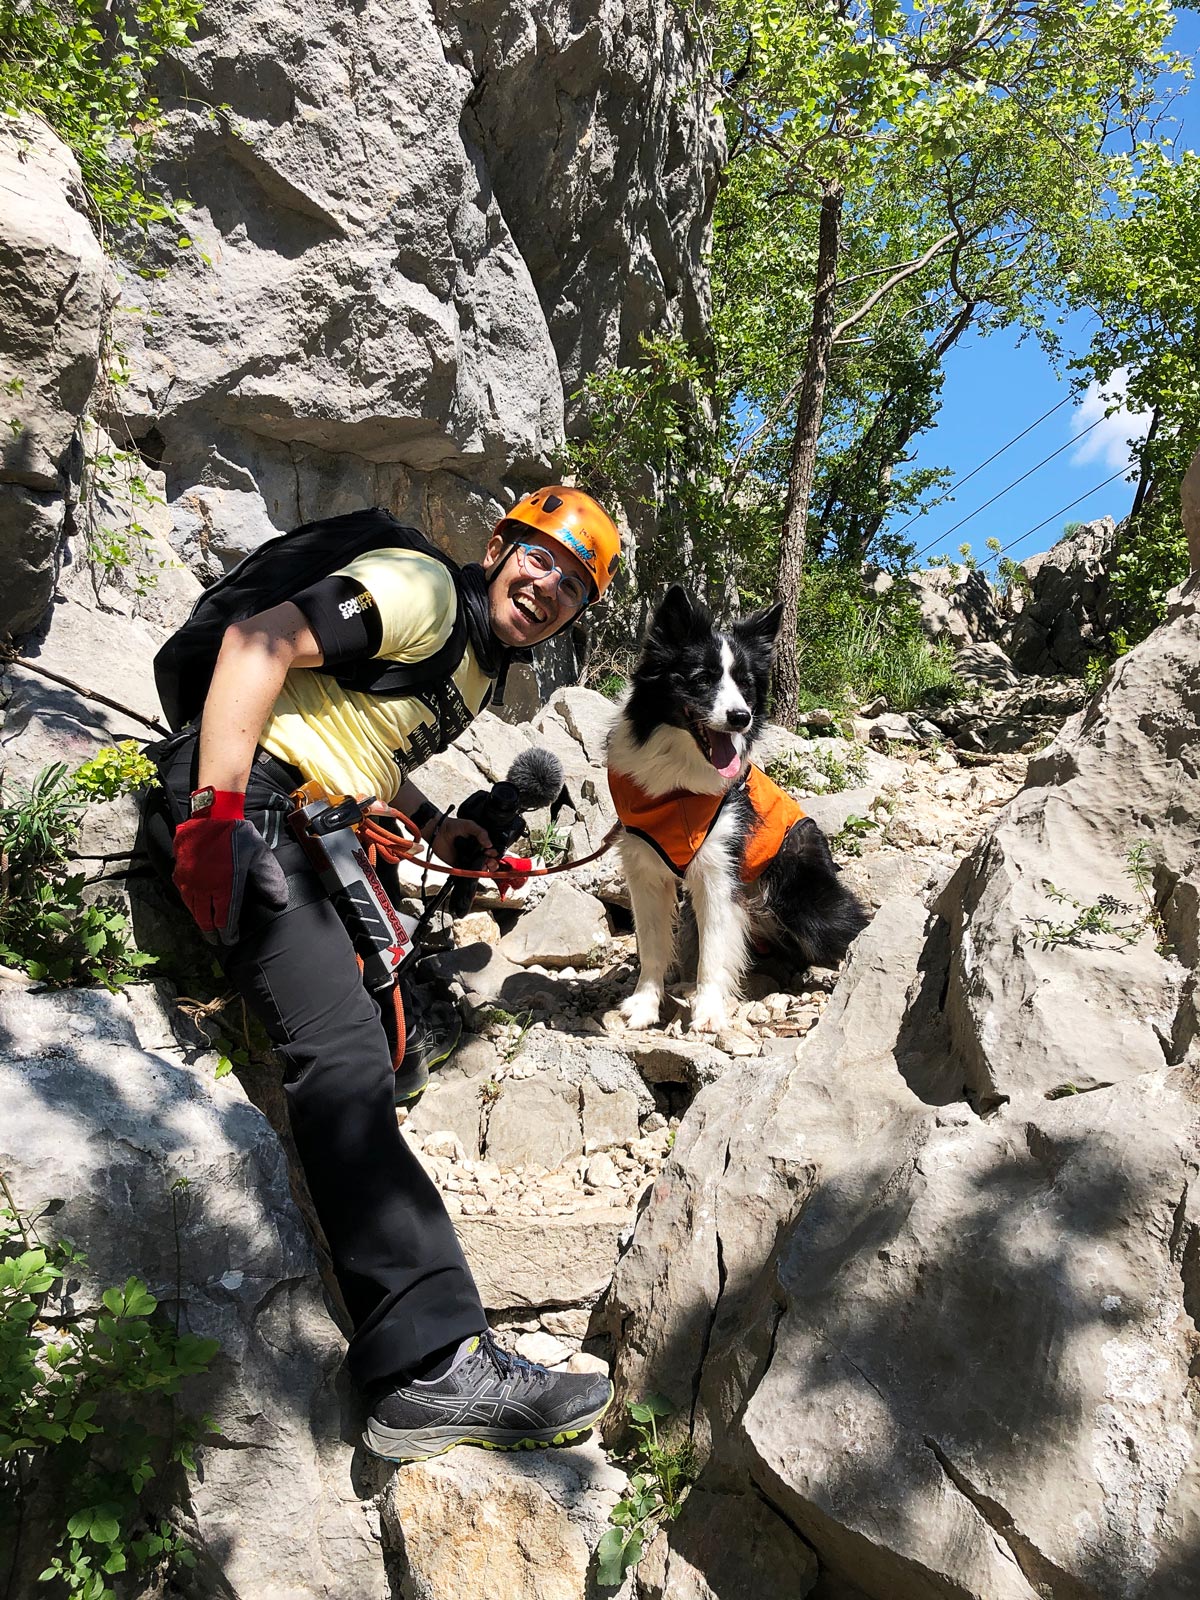 Pedro and Rafa on a rock before starting the zipline in Croatia